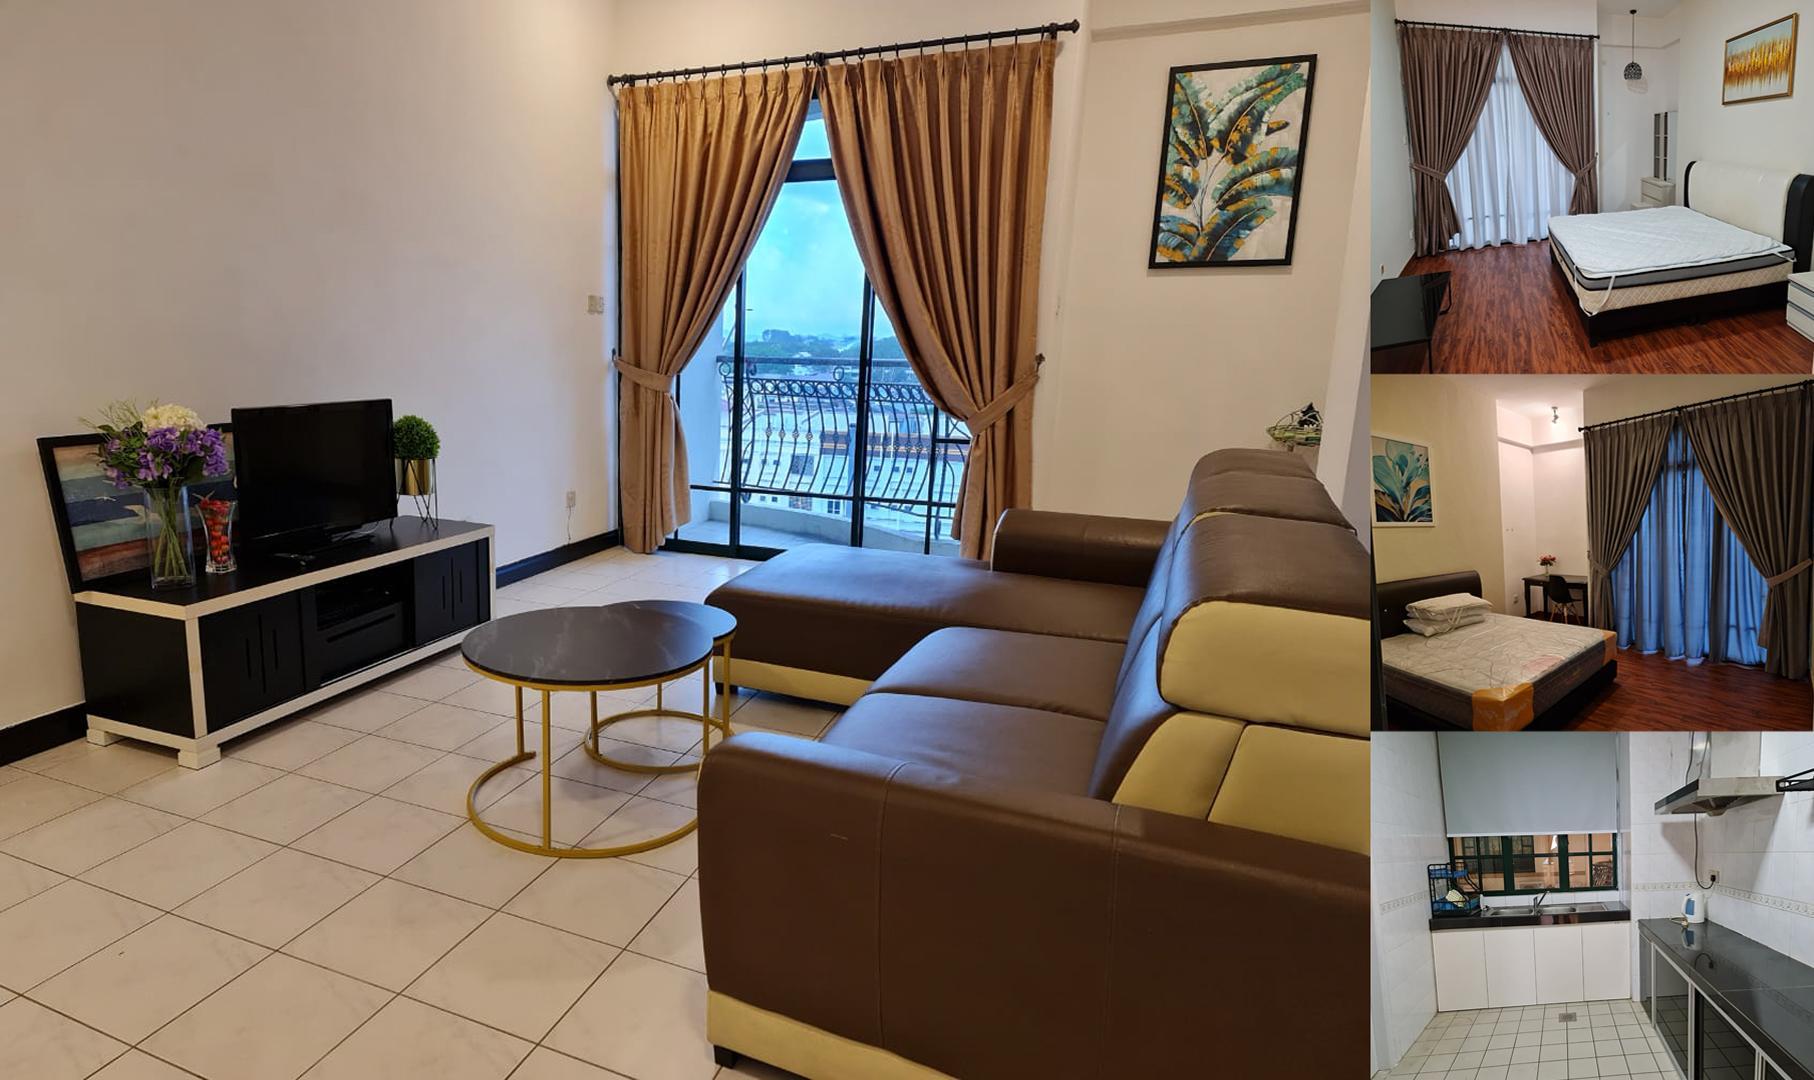 Riverine Emerald Resort Condominium For Rent! Located at Jalan Petanak